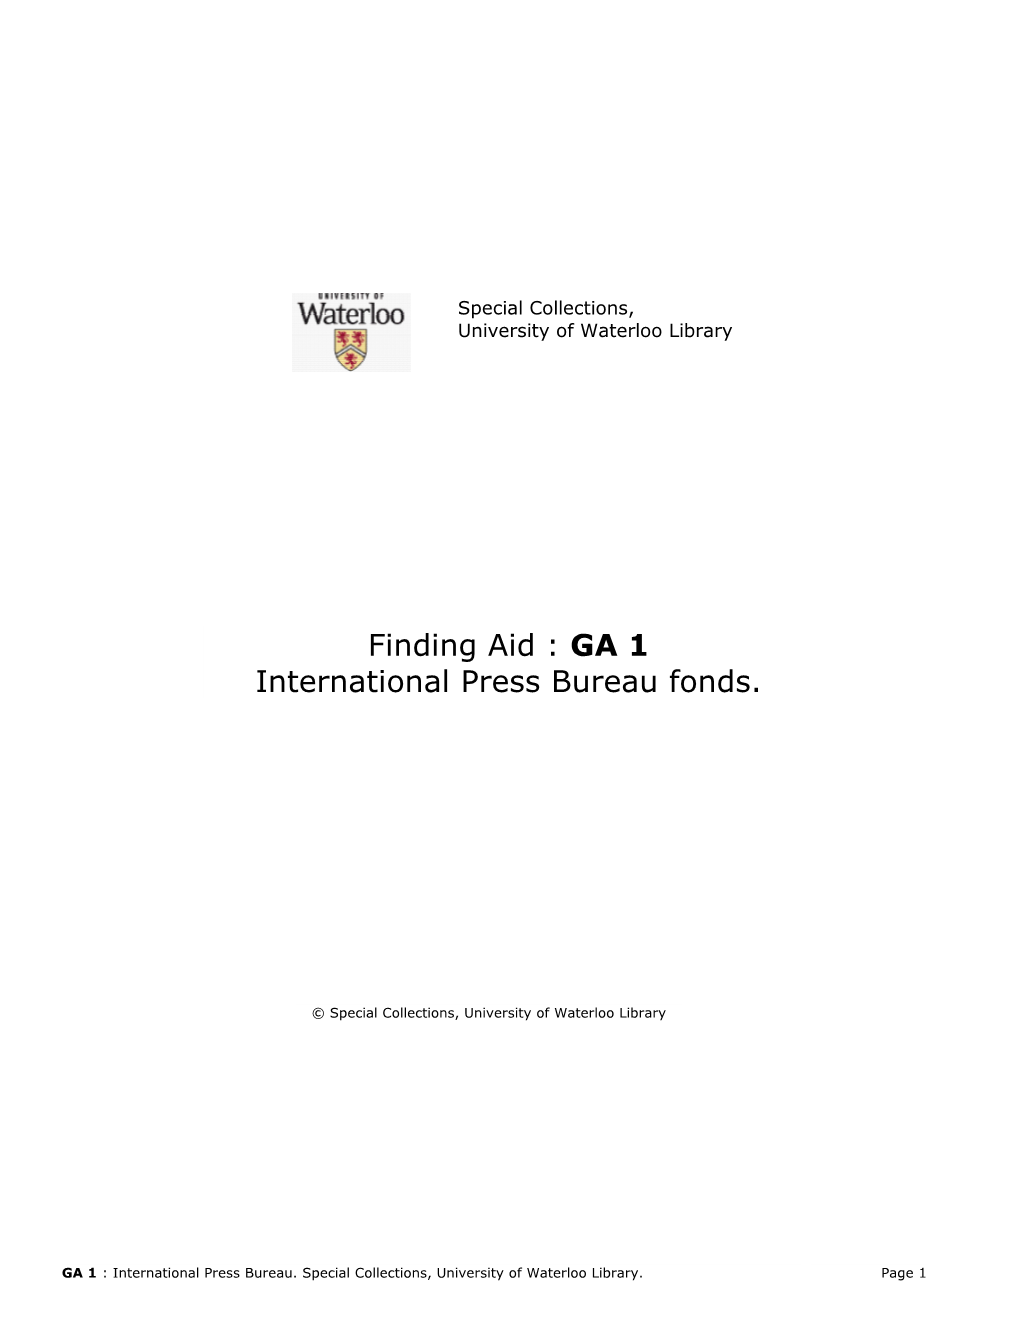 Finding Aid : GA 1 International Press Bureau Fonds